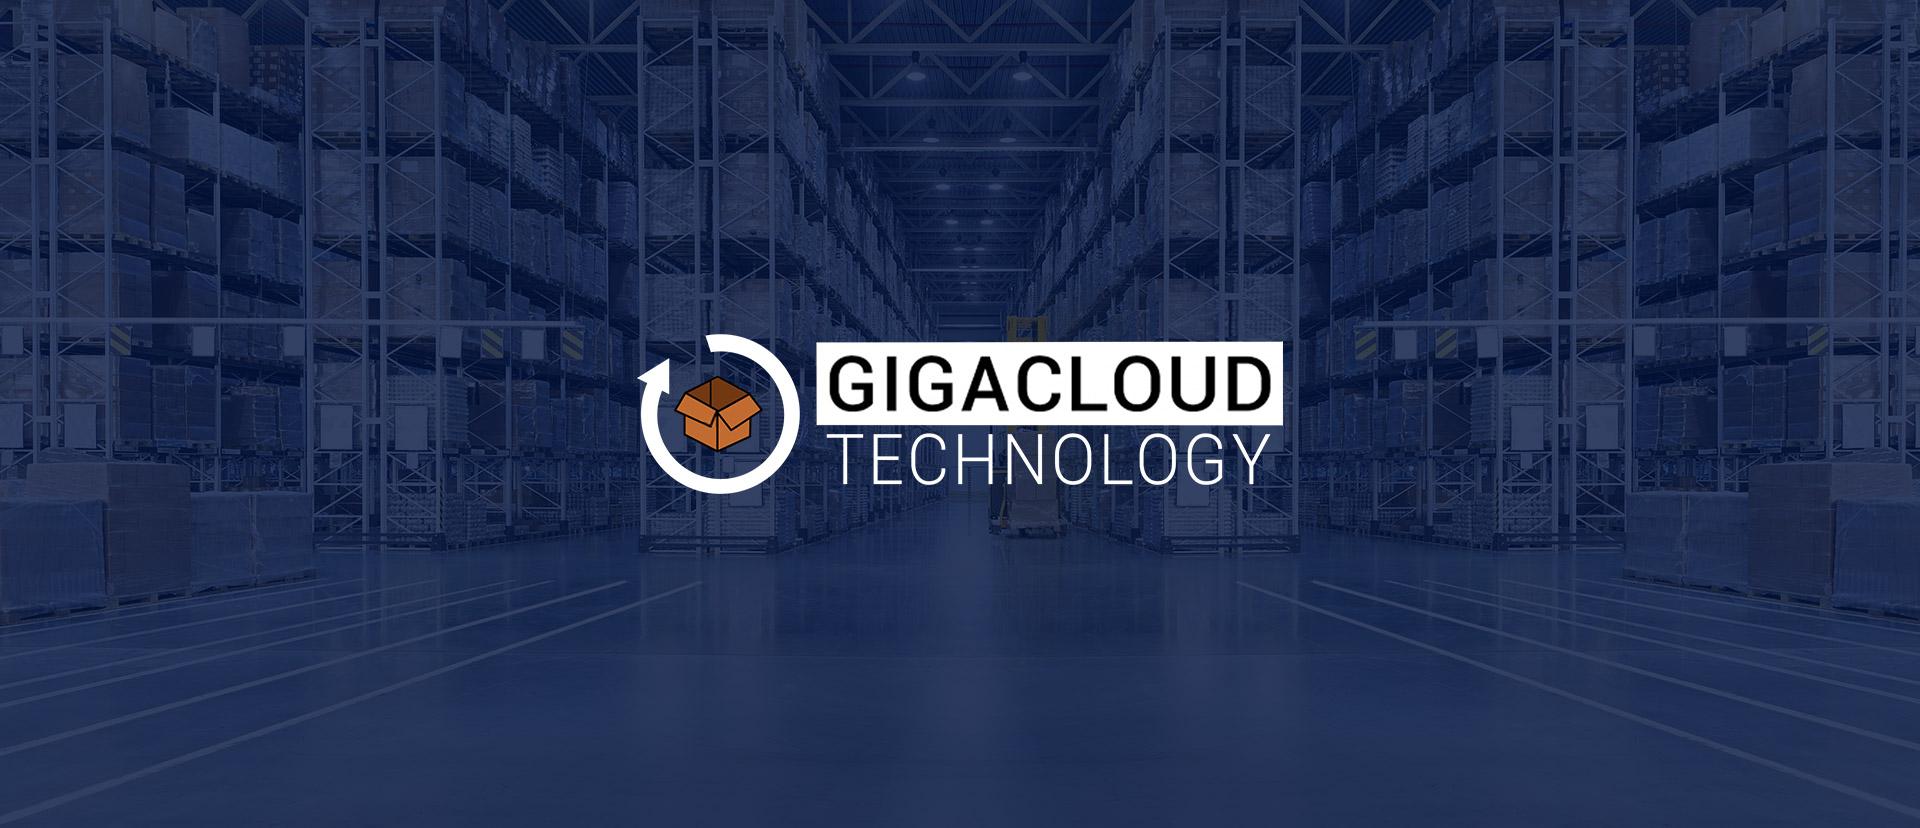 IPO ของ GigaCloud Technology: ตลาดสำหรับ SME